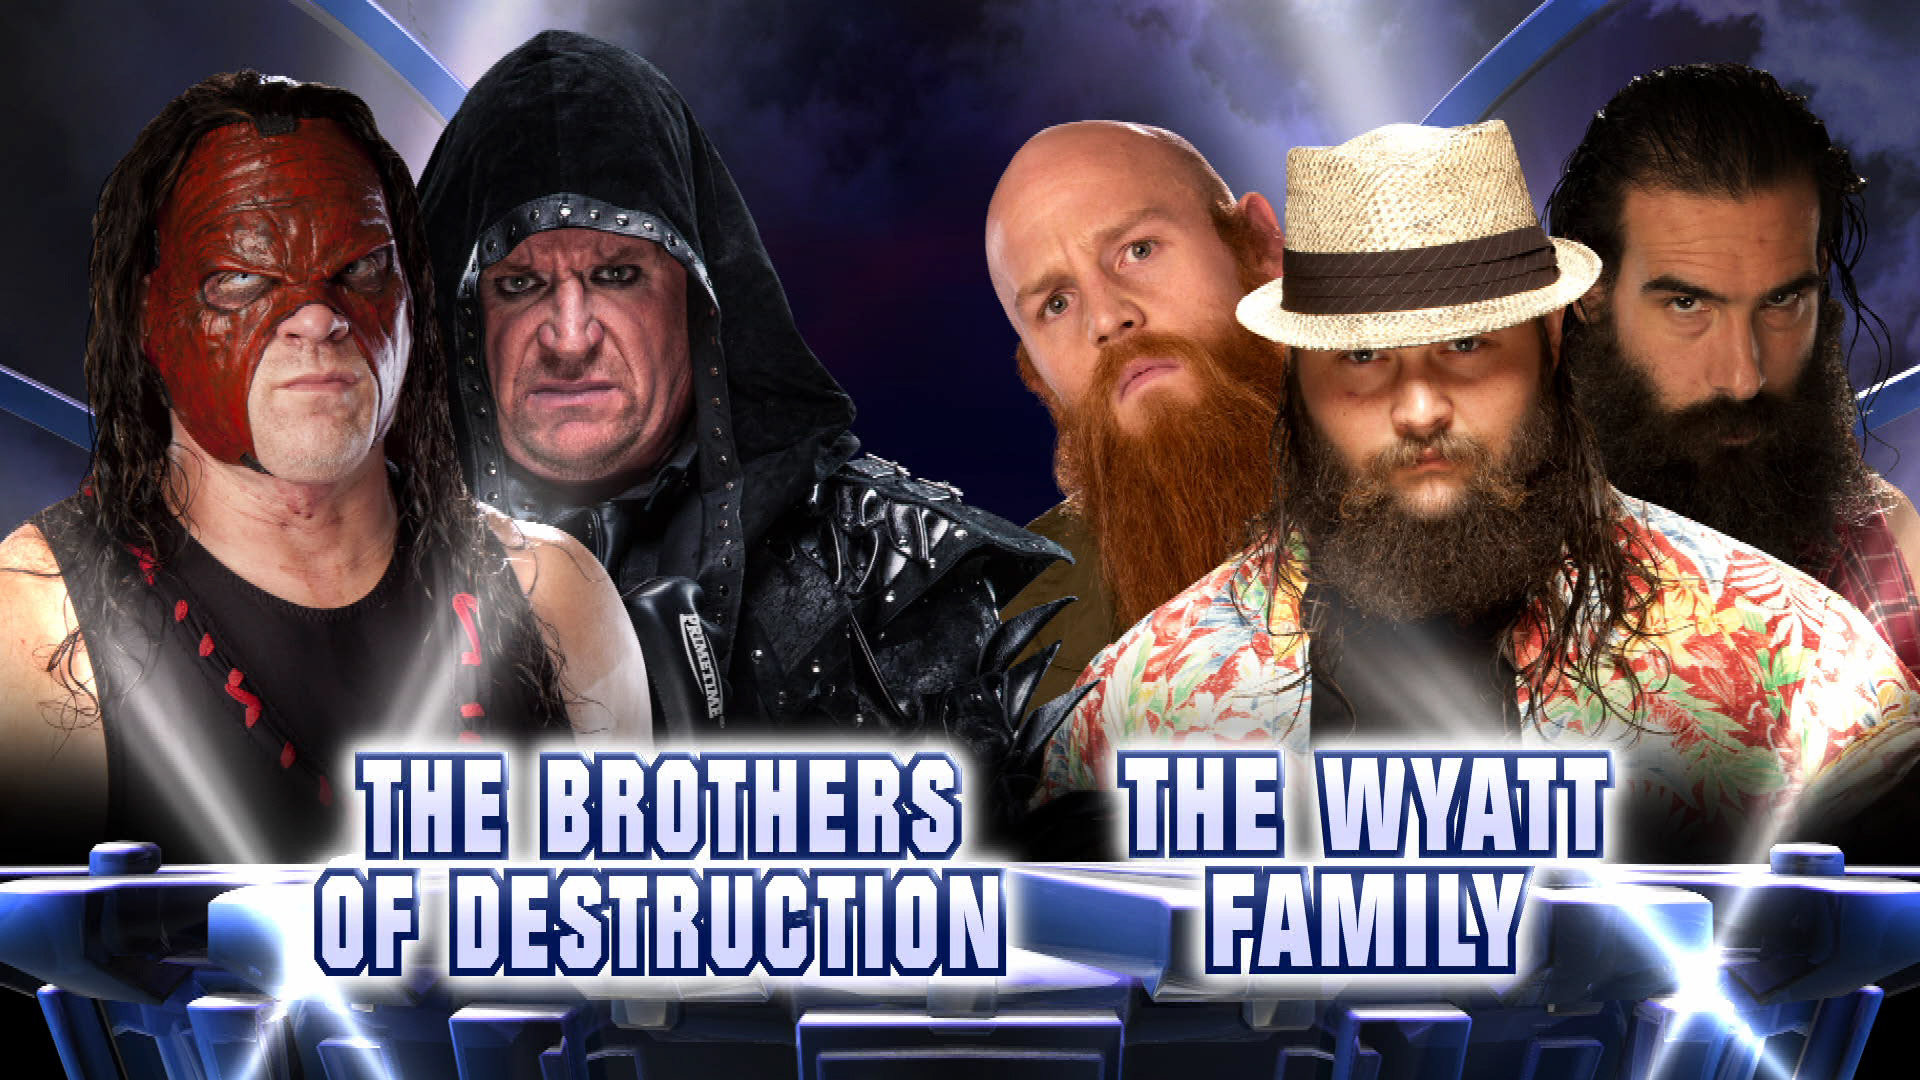 1920x1080 The Brothers of Destruction vs. The Wyatt Family: Fantasy Warfare | WWE